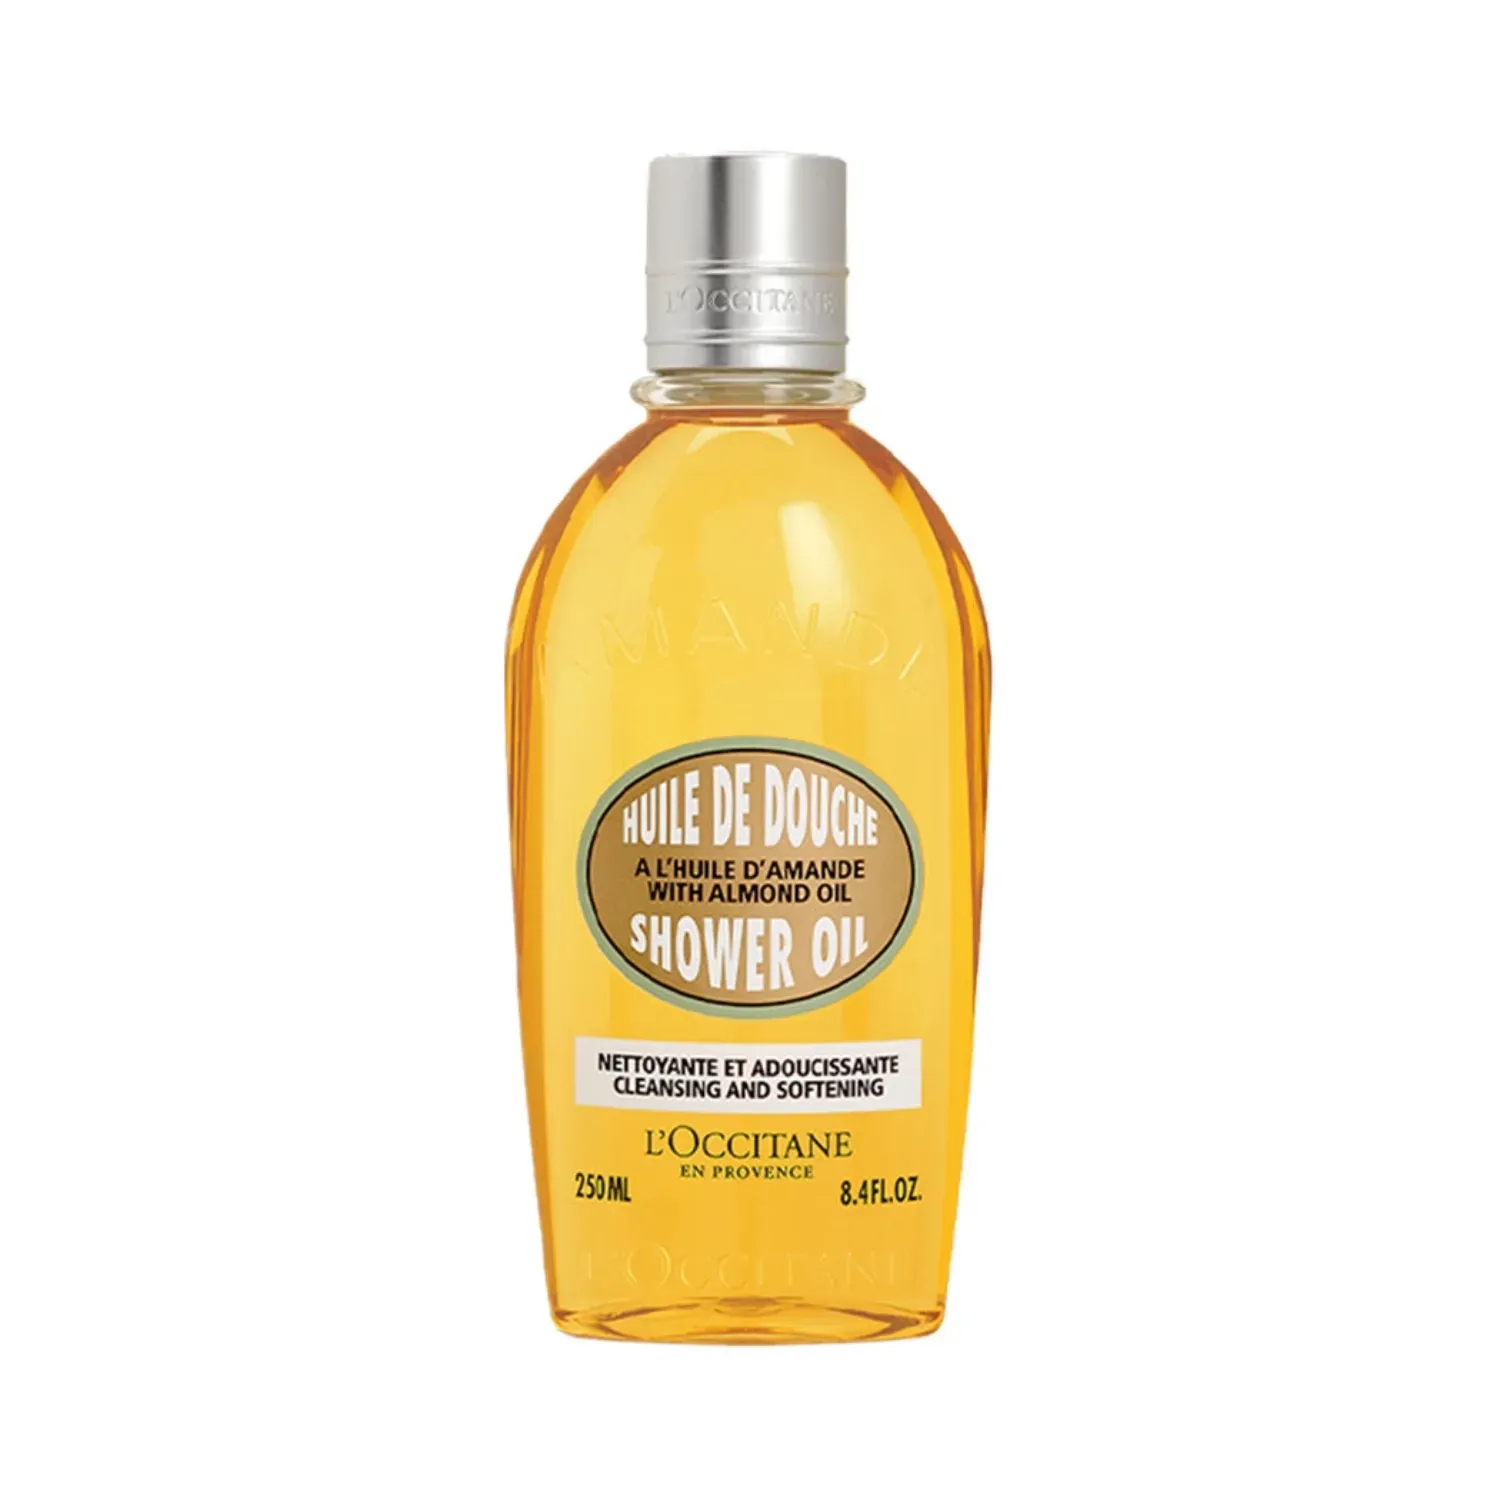 L'occitane | L'occitane Almond Shower Oil - (250ml)